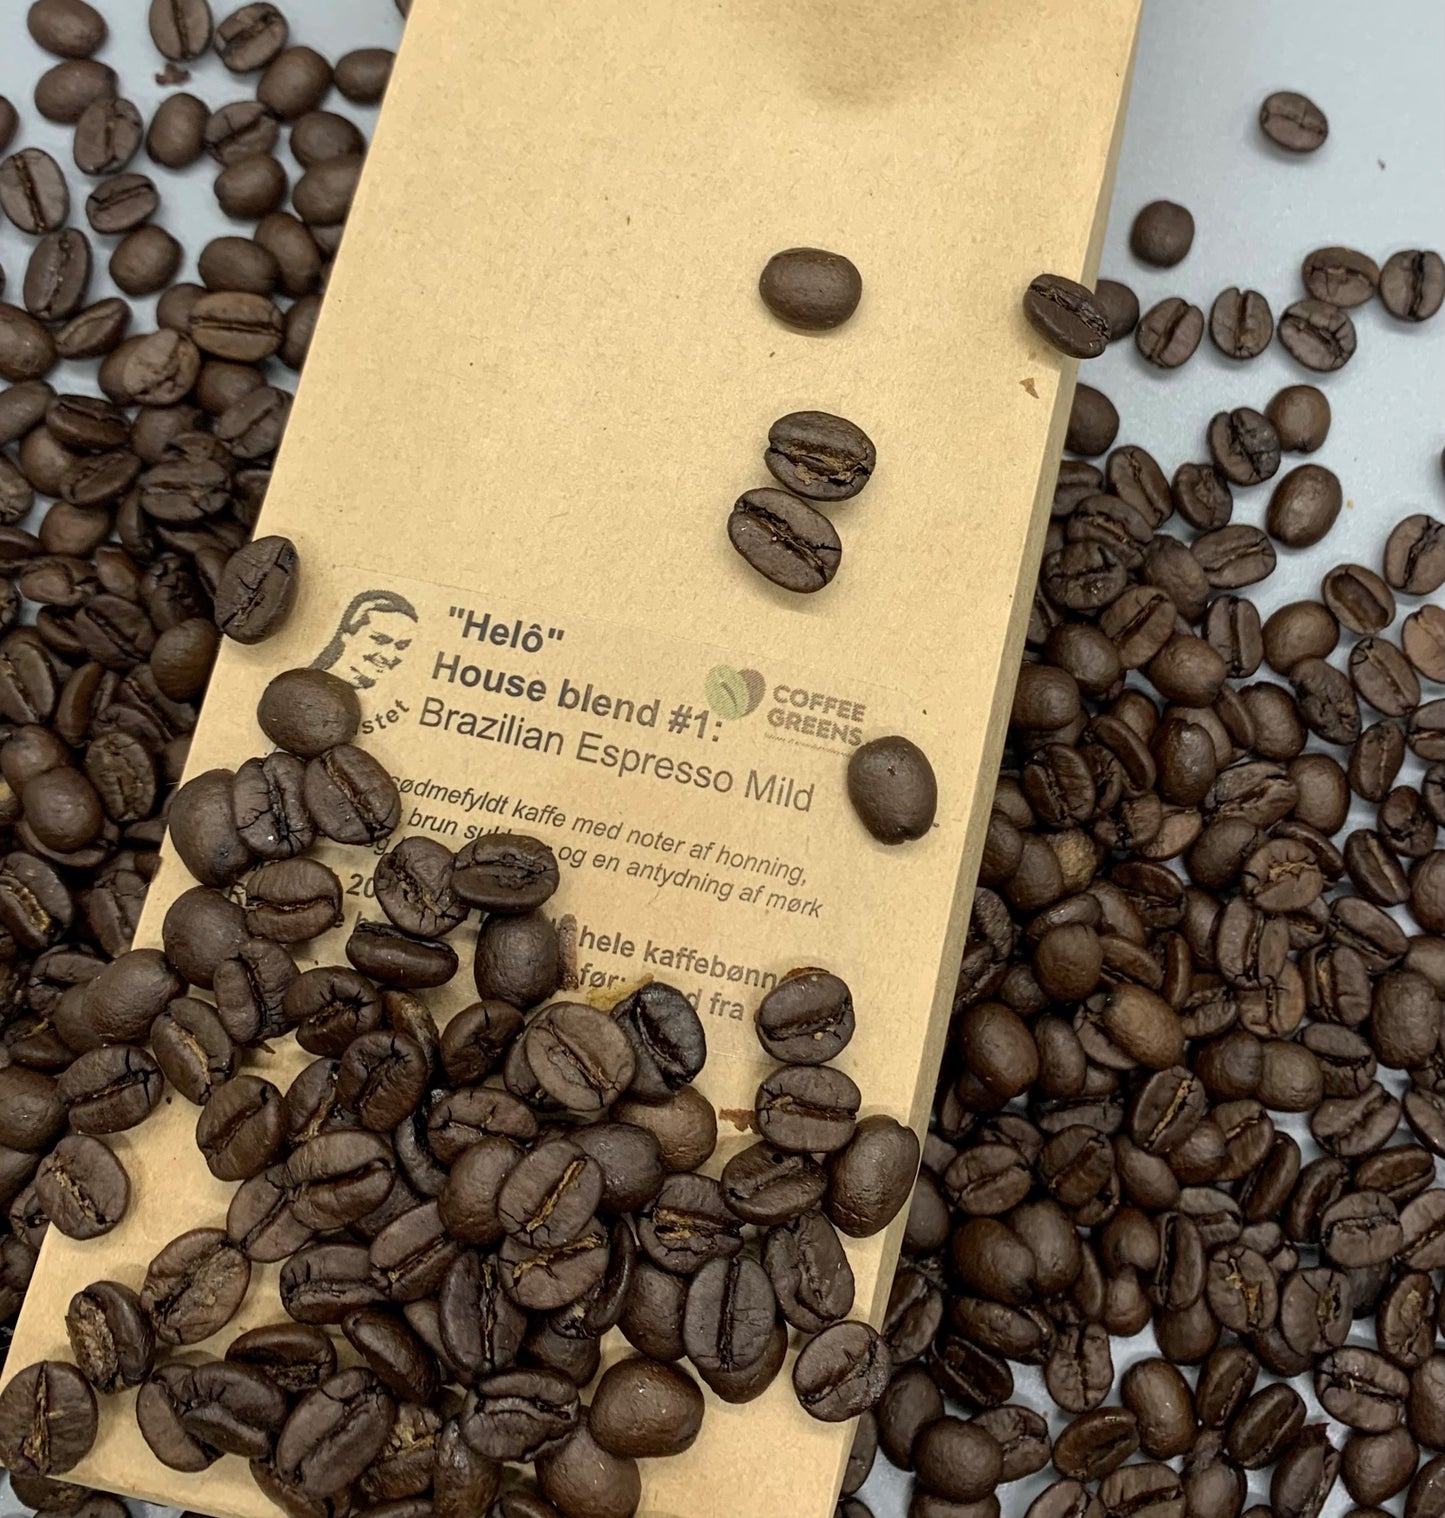 "Helô"- House blend # 1:Brazilian Espresso Mild - roasted coffee beans